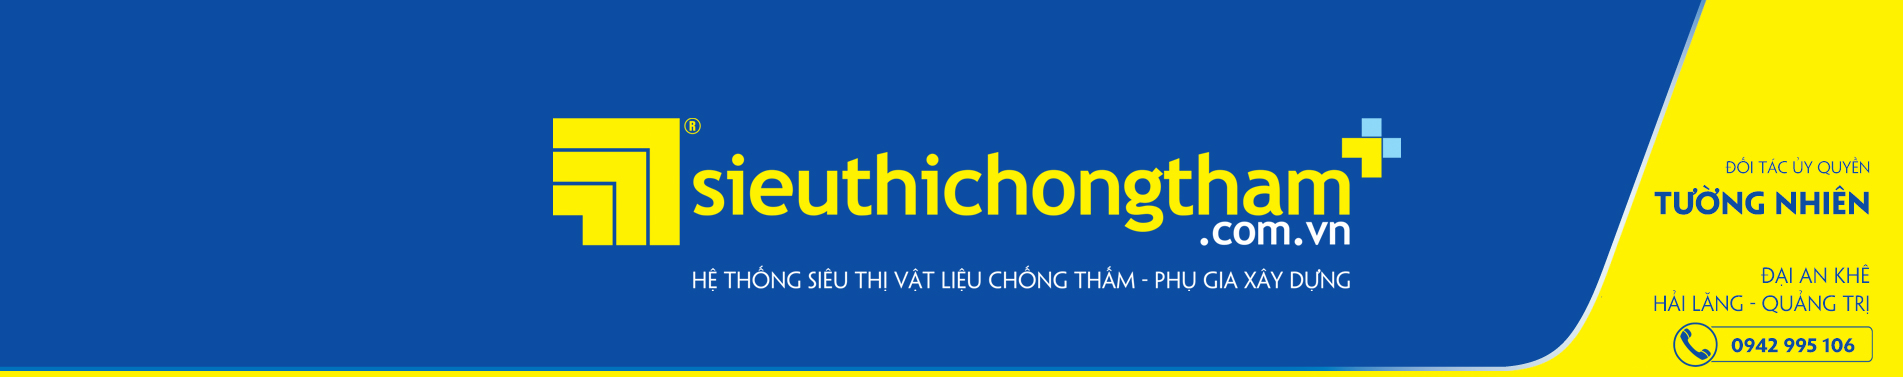 Tuong Nhien Banner